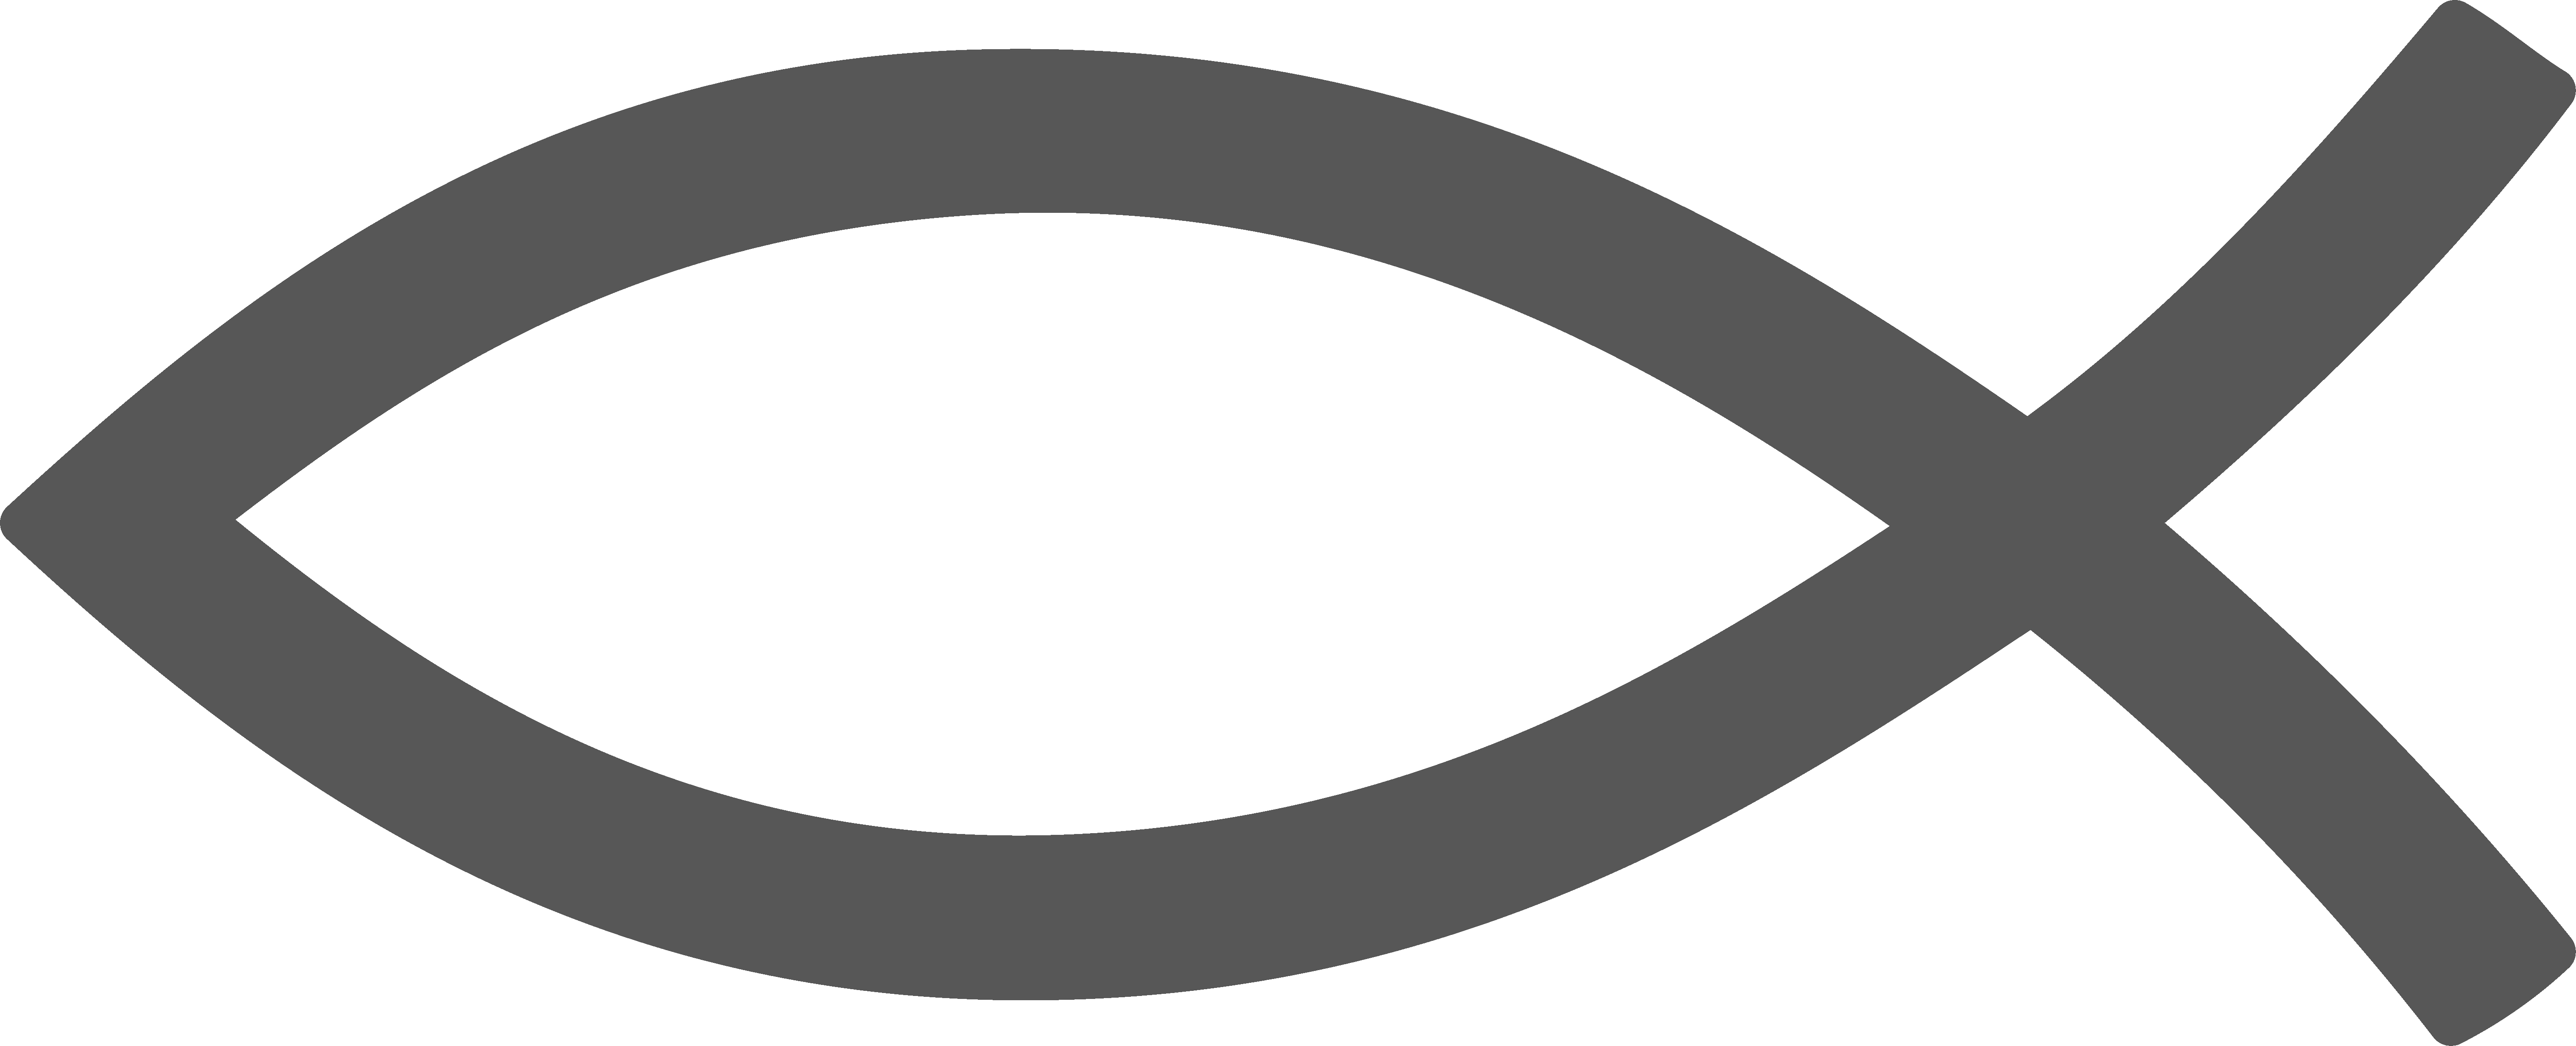 clipart fish logo